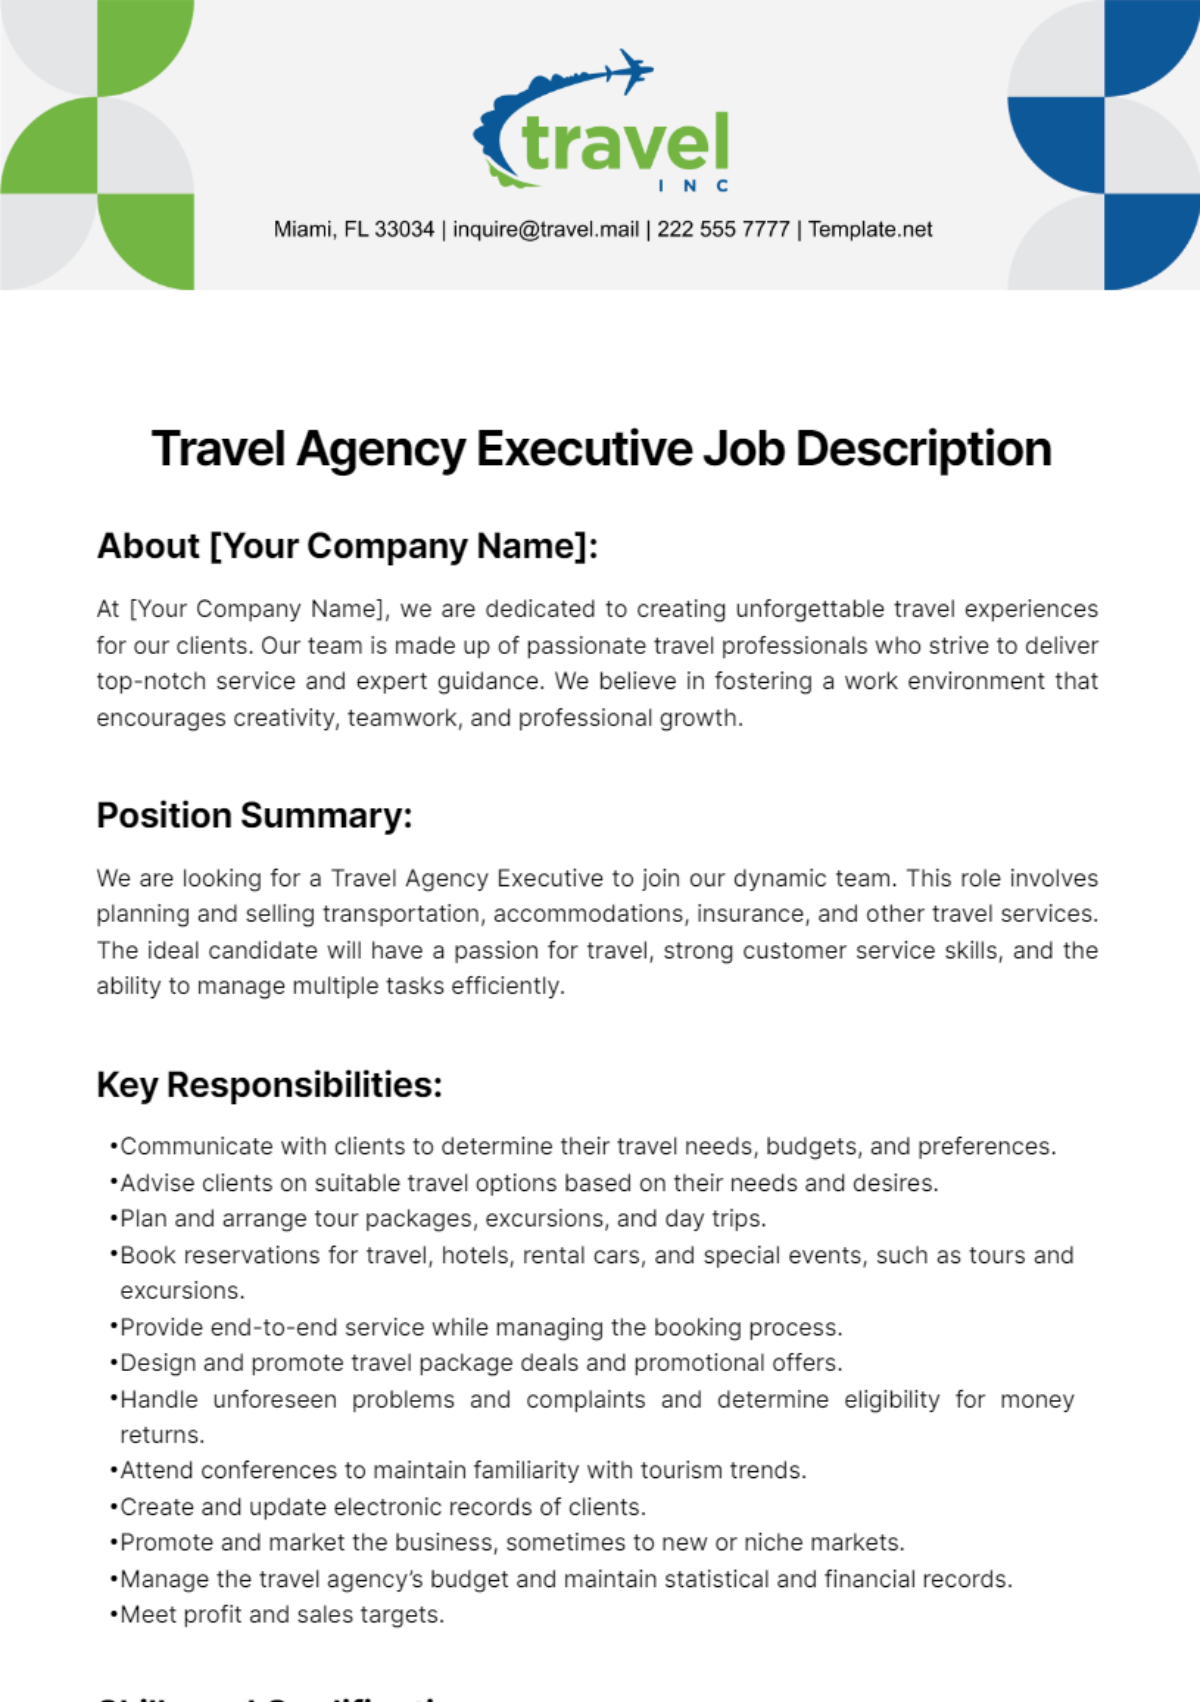 Free Travel Agency Executive Job Description Template